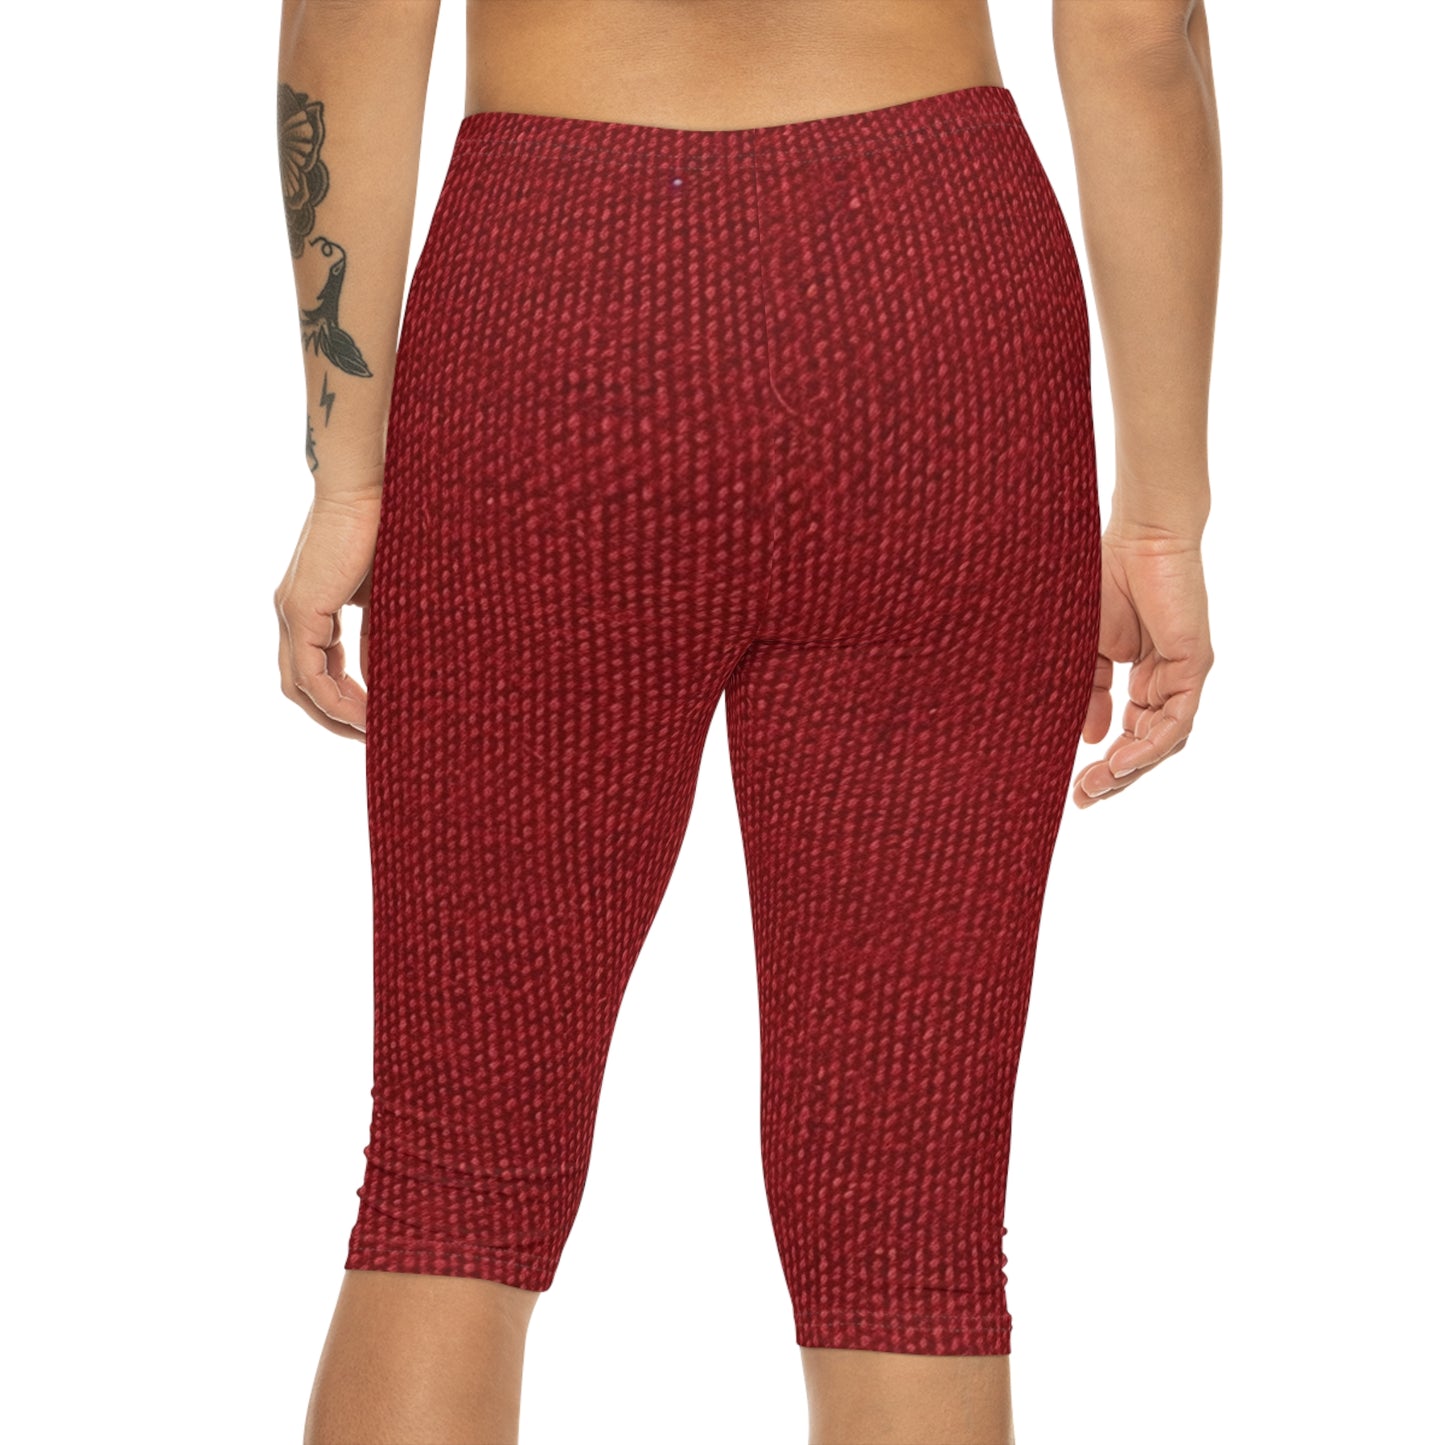 Bold Ruby Red: Denim-Inspired, Passionate Fabric Style - Women’s Capri Leggings (AOP)